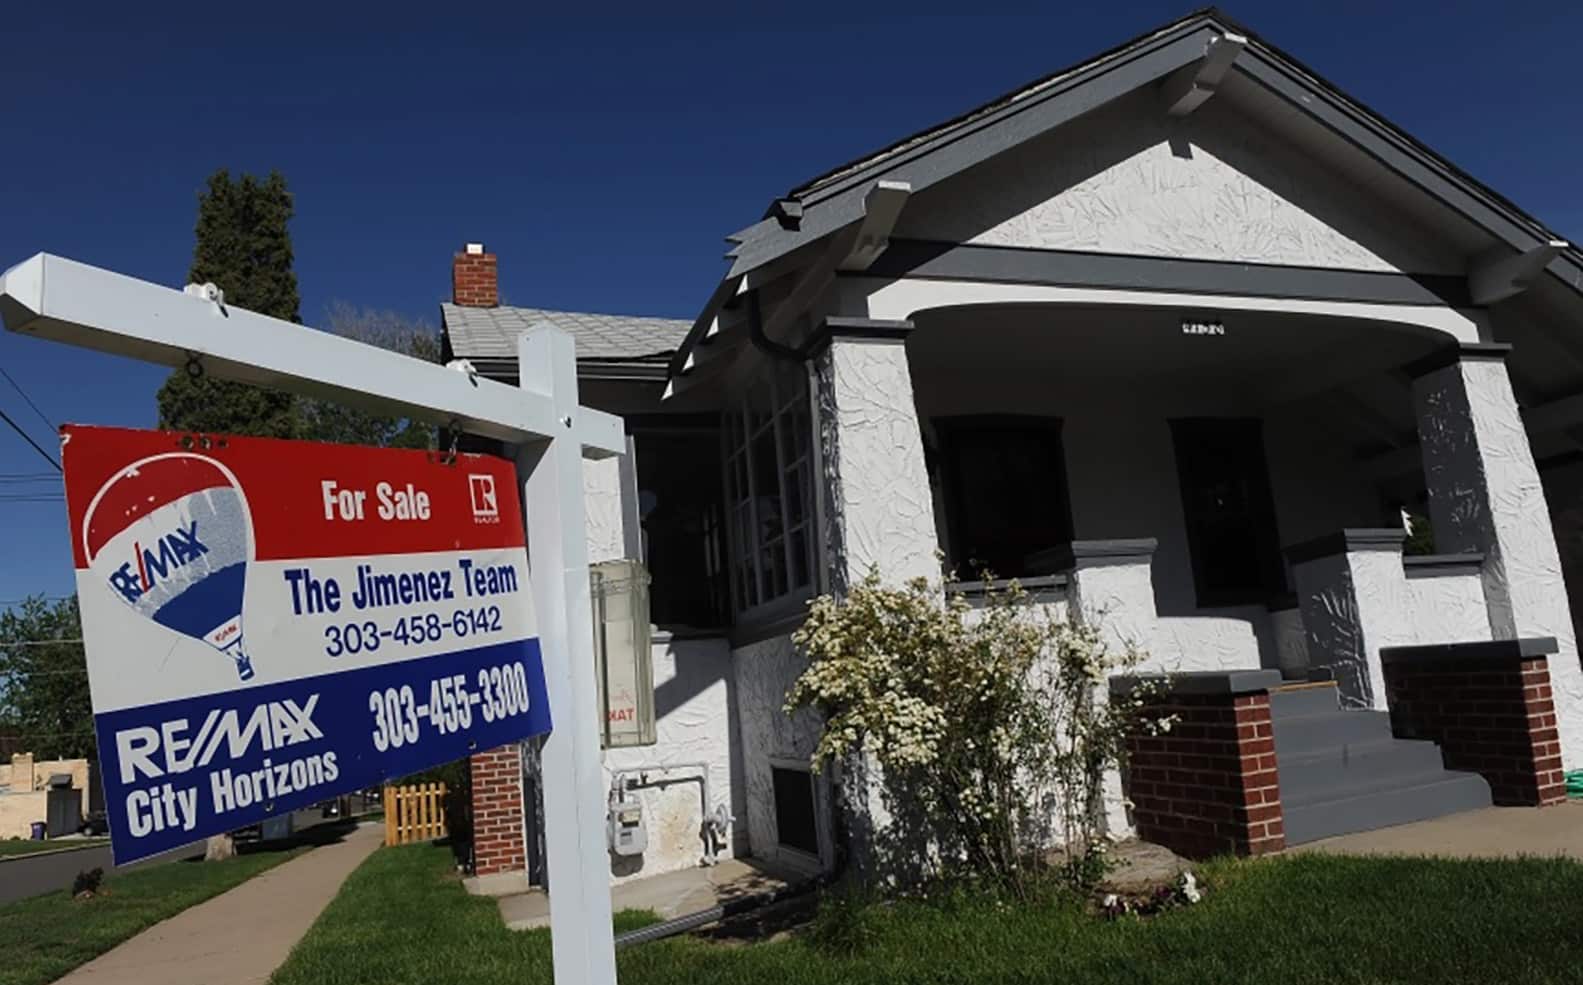 Real estate broker commissions dropping in Denver